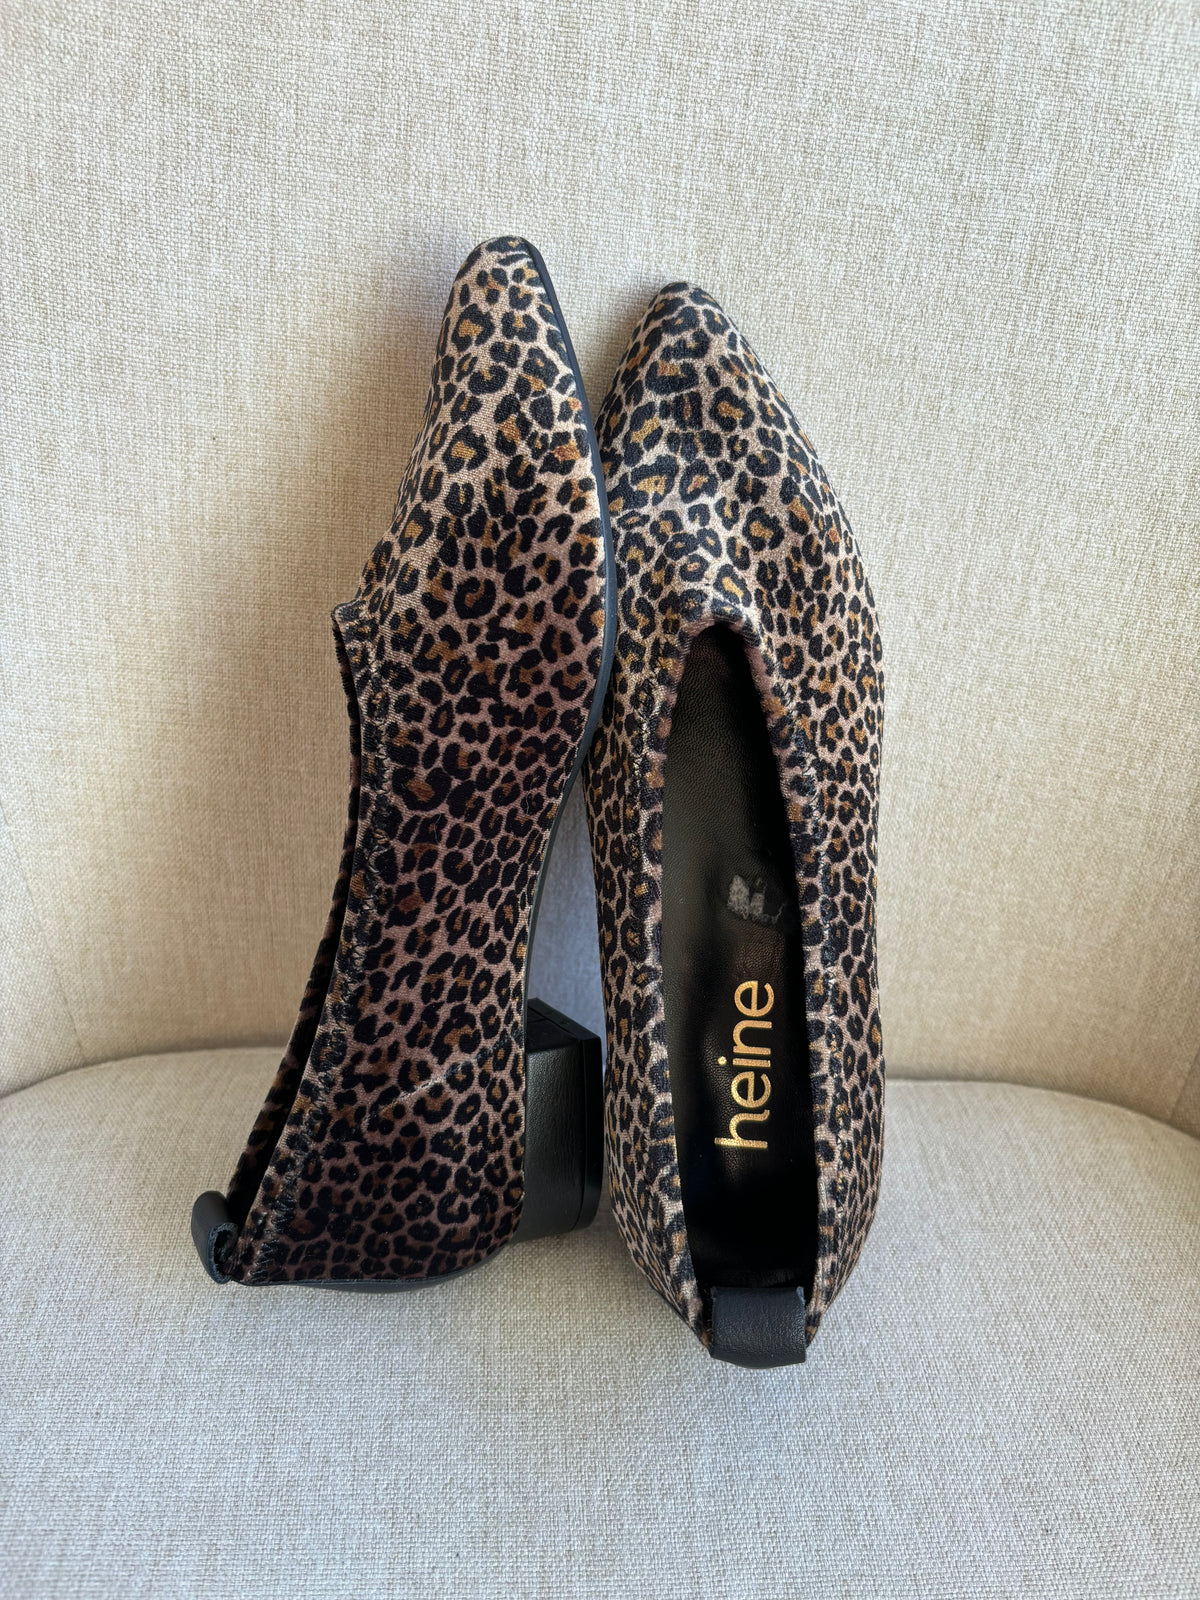 Stunning leopard print velour heels shoes by Heine size 5